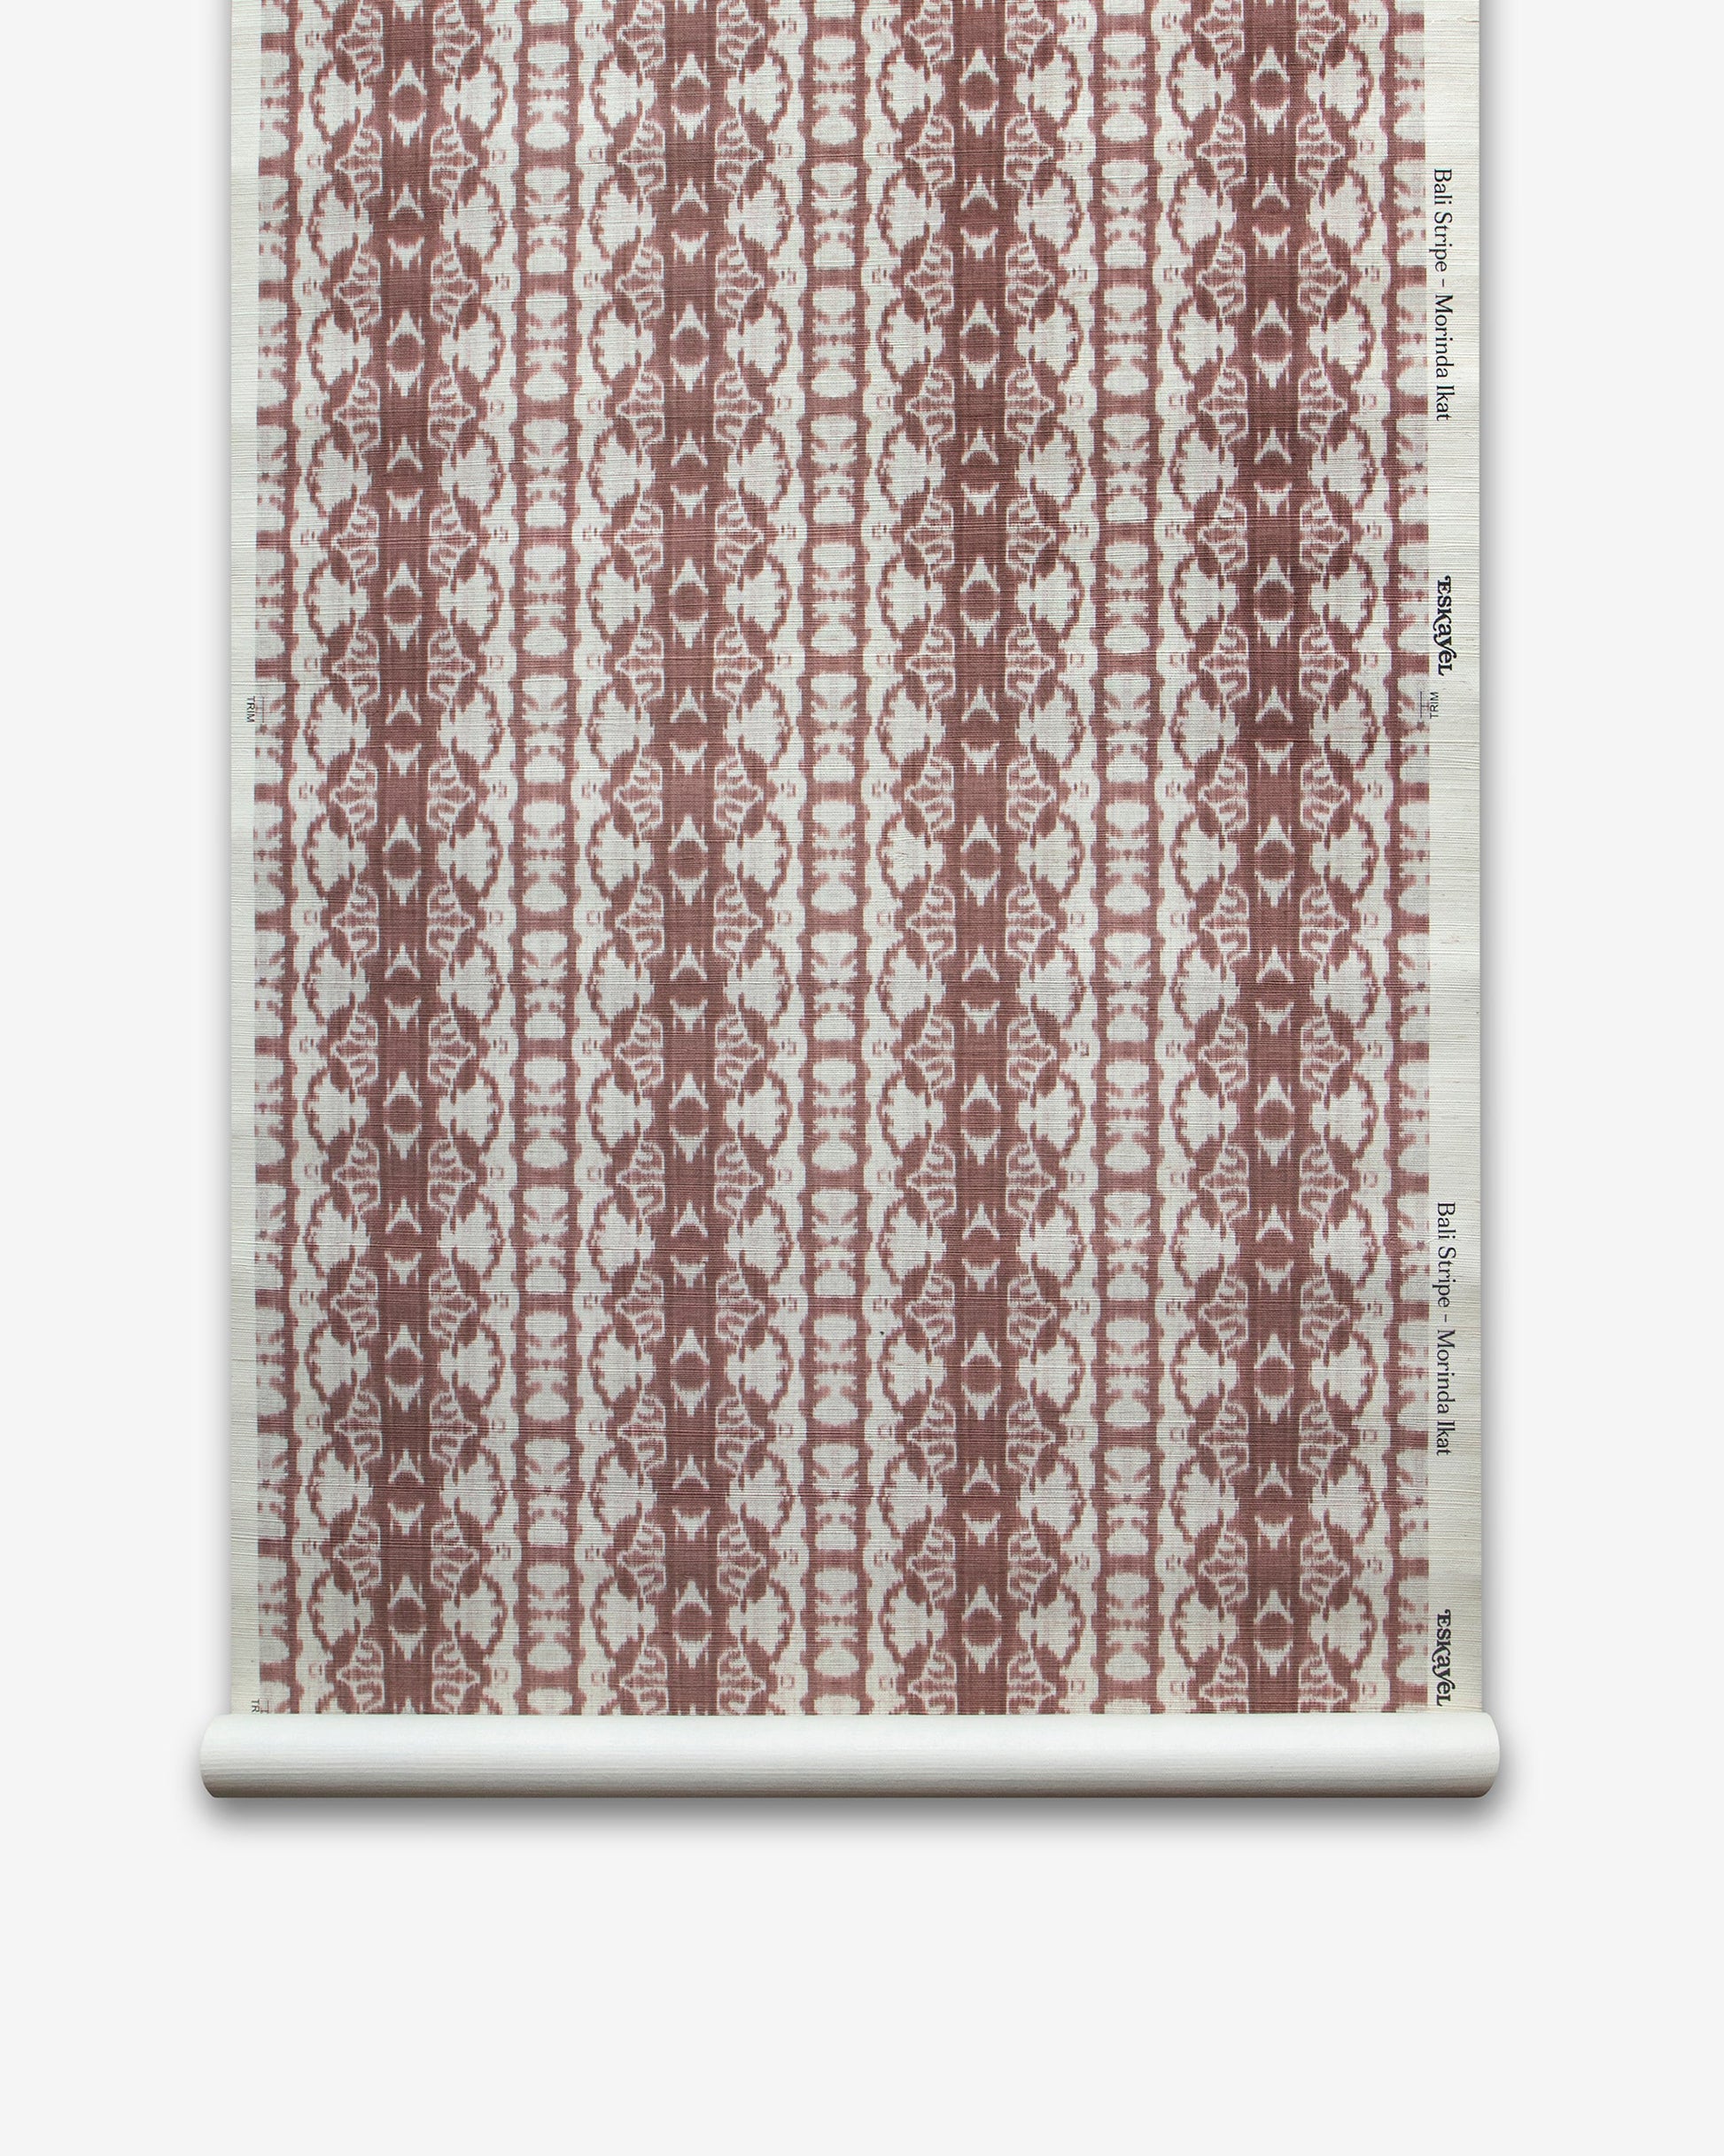 Checker Grasscloth Wallpaper - Hand-Drawn Design with Nostalgic